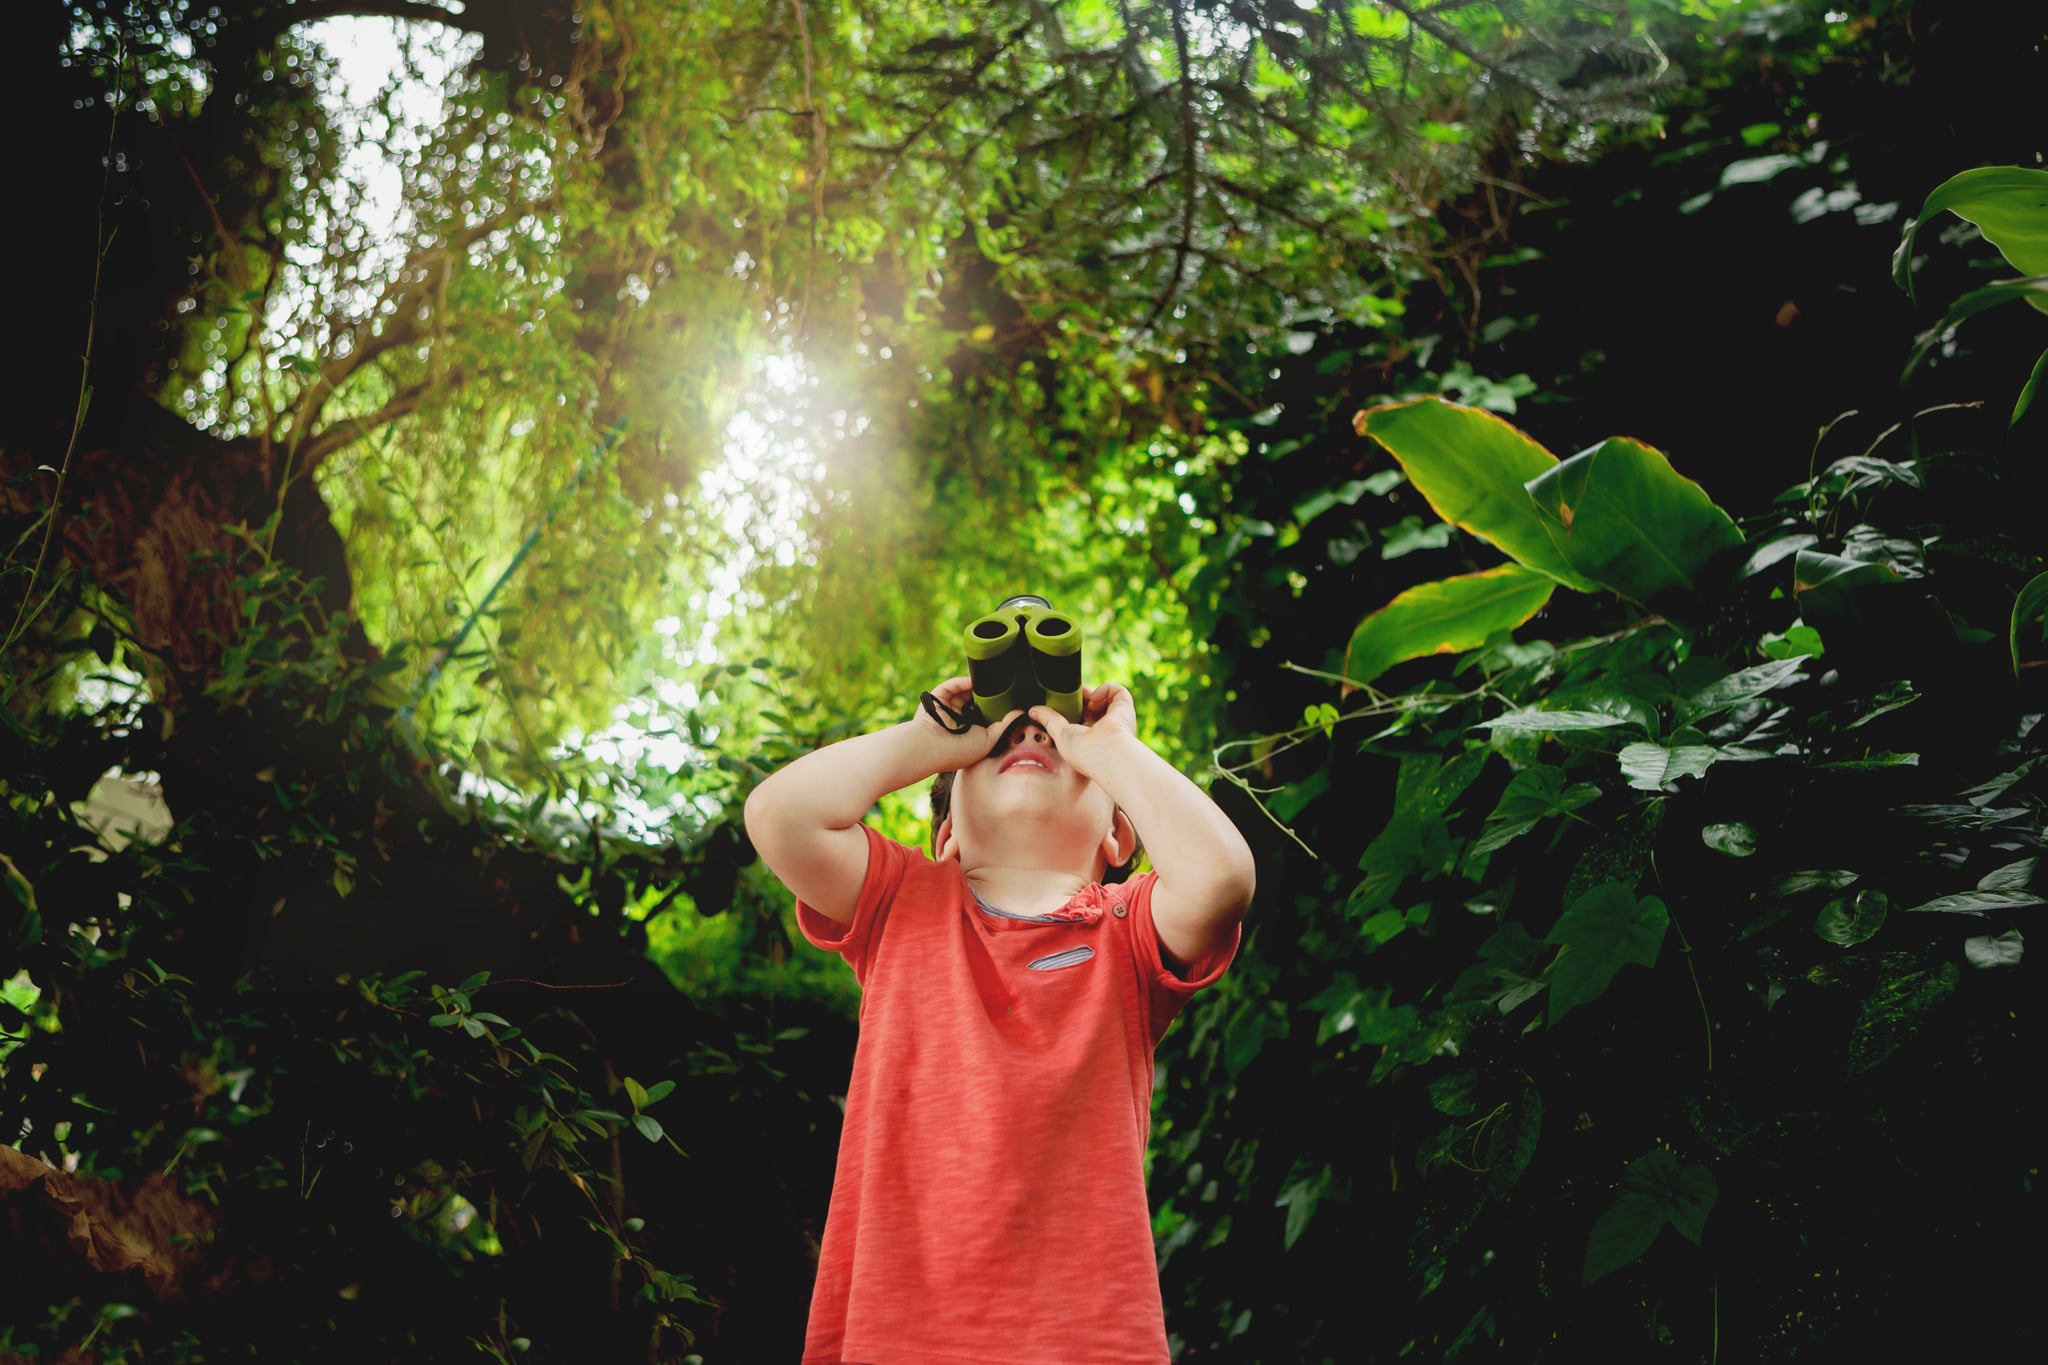 a boy looking in binoculars outdoors